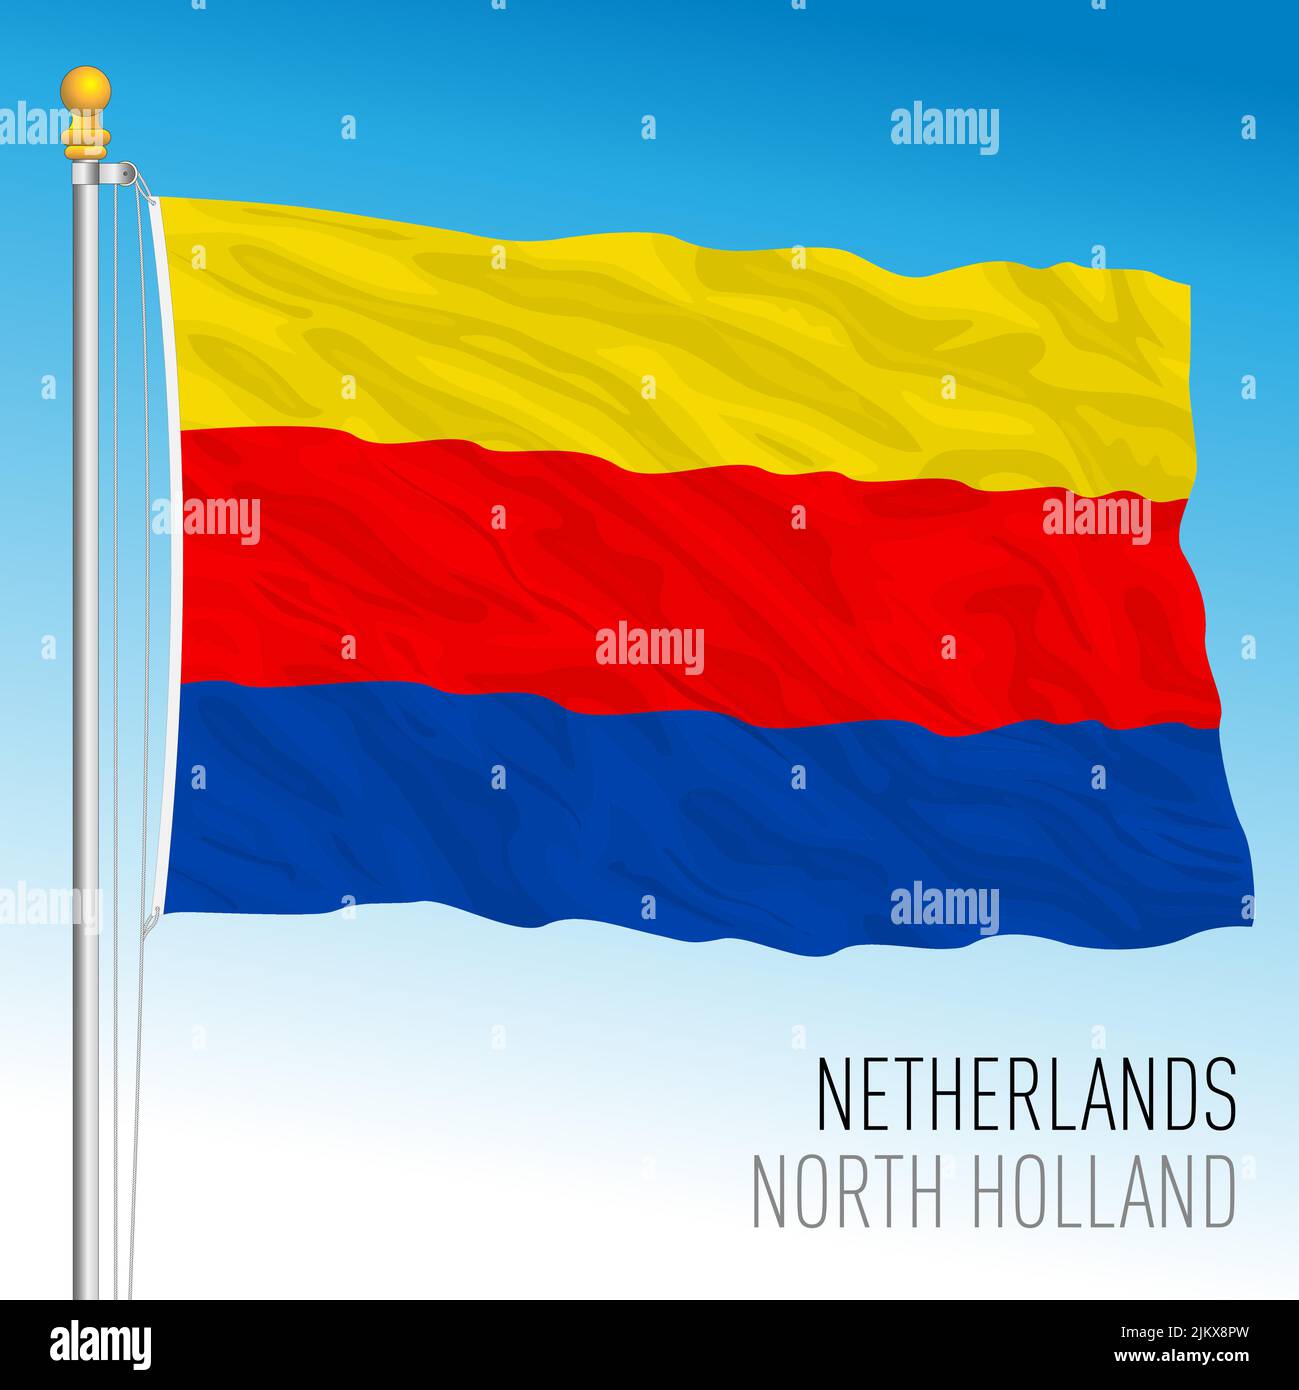 North Holland provincial flag, Netherlands, European Union, vector illustration Stock Vector